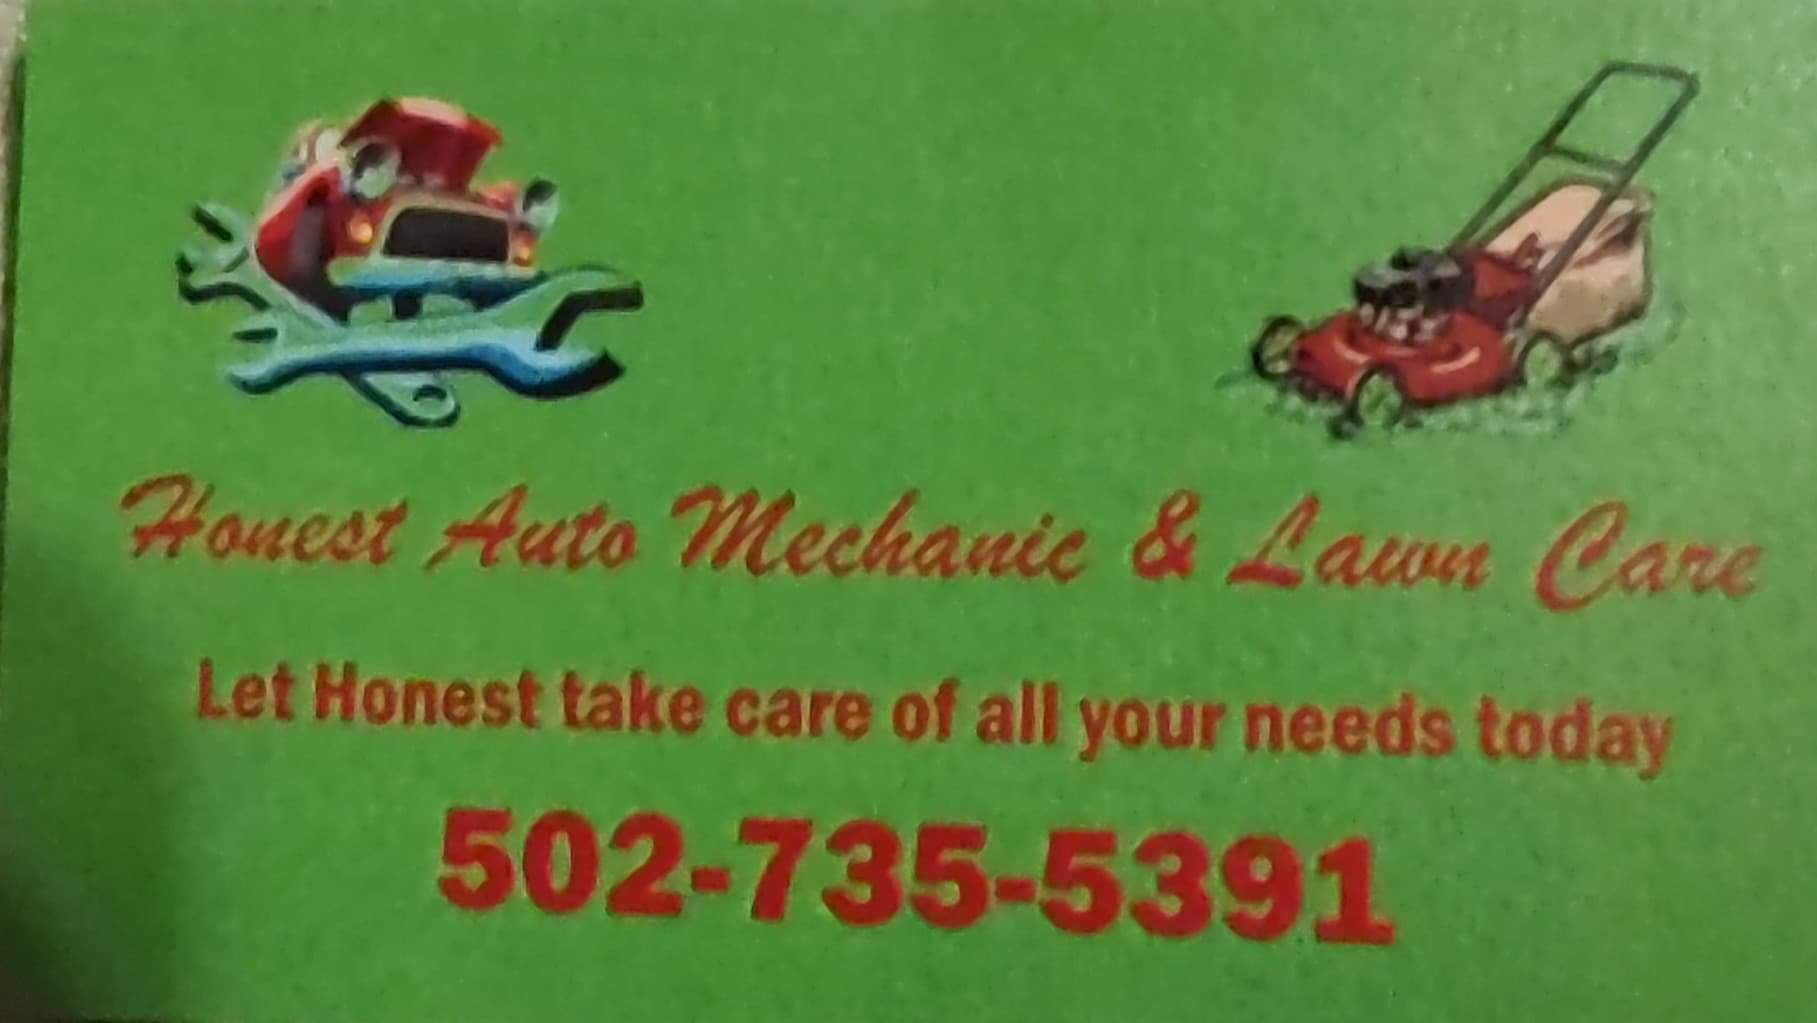 Dwayne Honest Mechanic and Lawn Care Logo